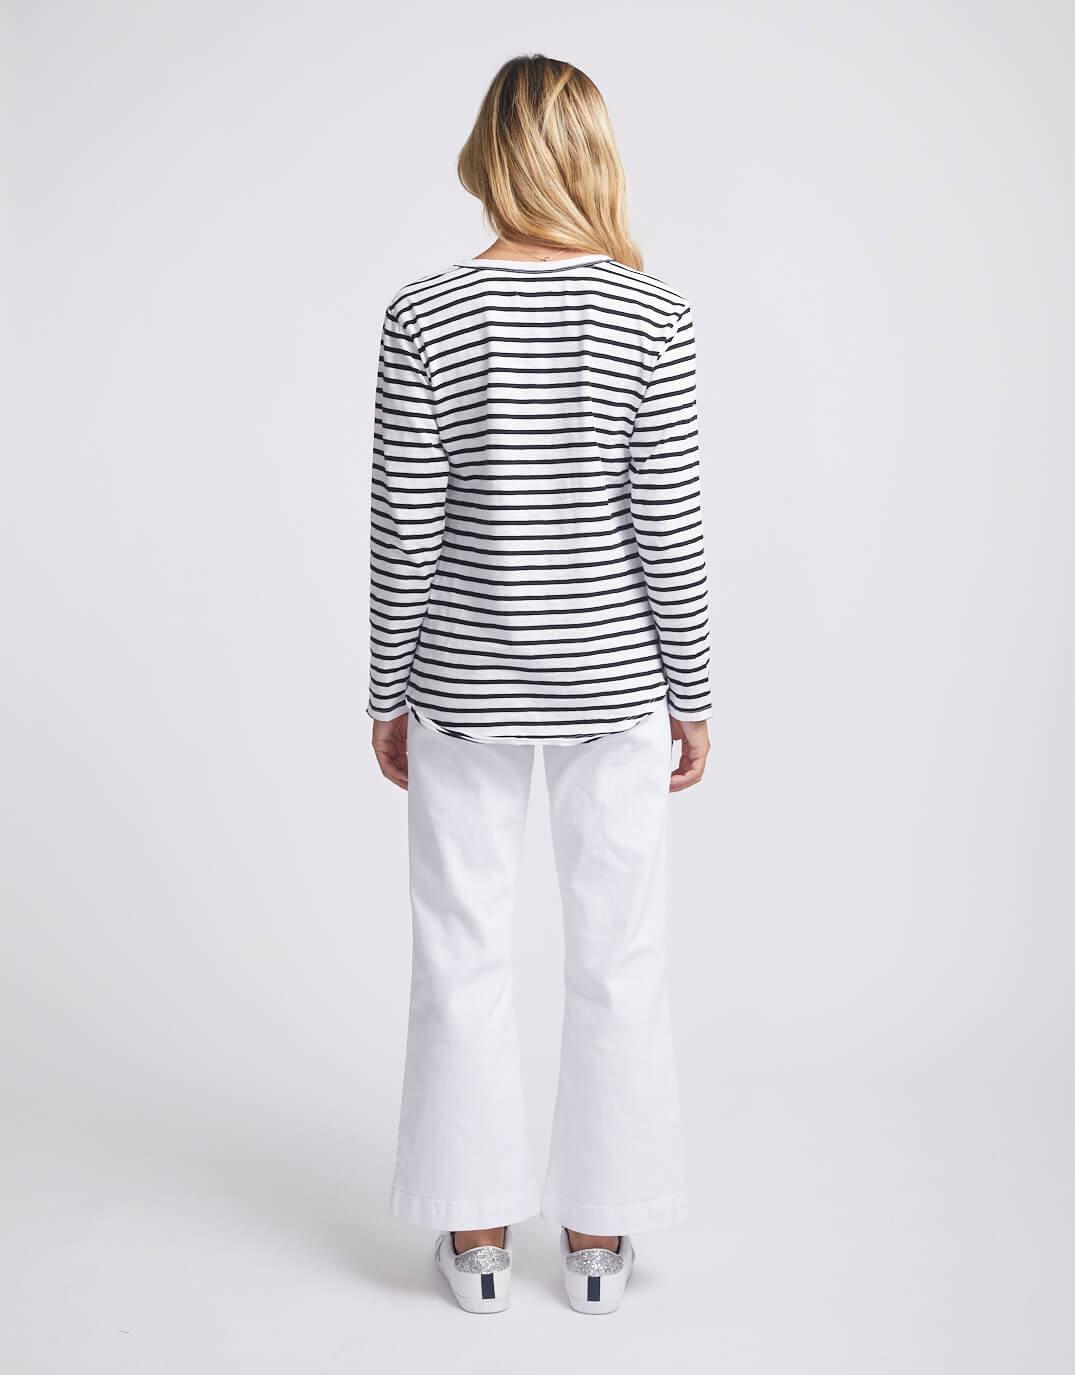 White & Co. - Original Round Neck Long Sleeve T-Shirt - Black/White Stripe - White & Co Living Tops